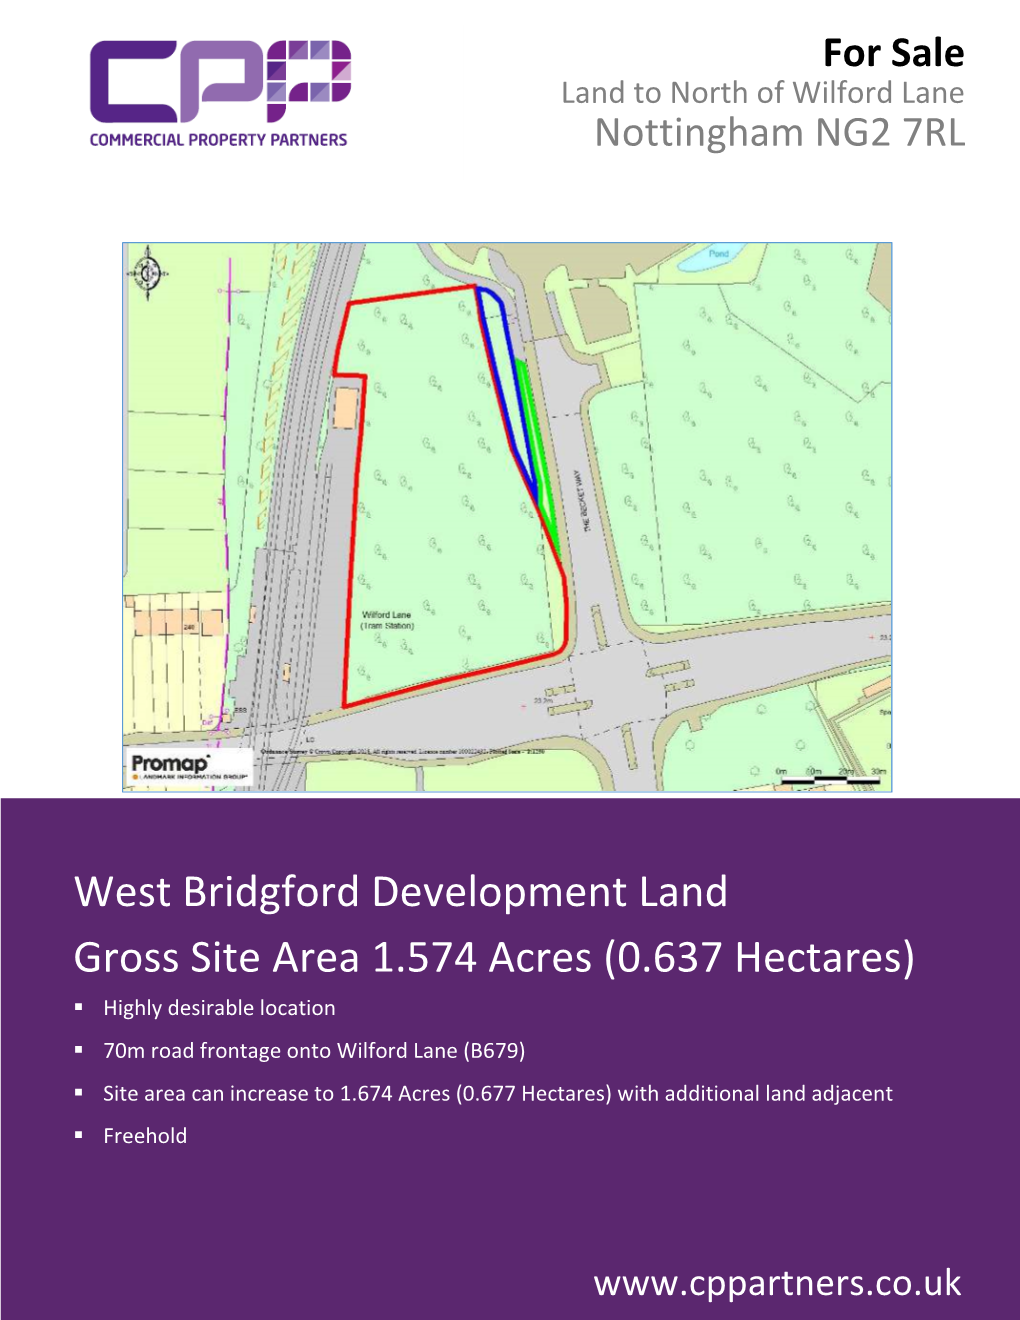 West Bridgford Development Land Gross Site Area 1.574 Acres (0.637 Hectares)